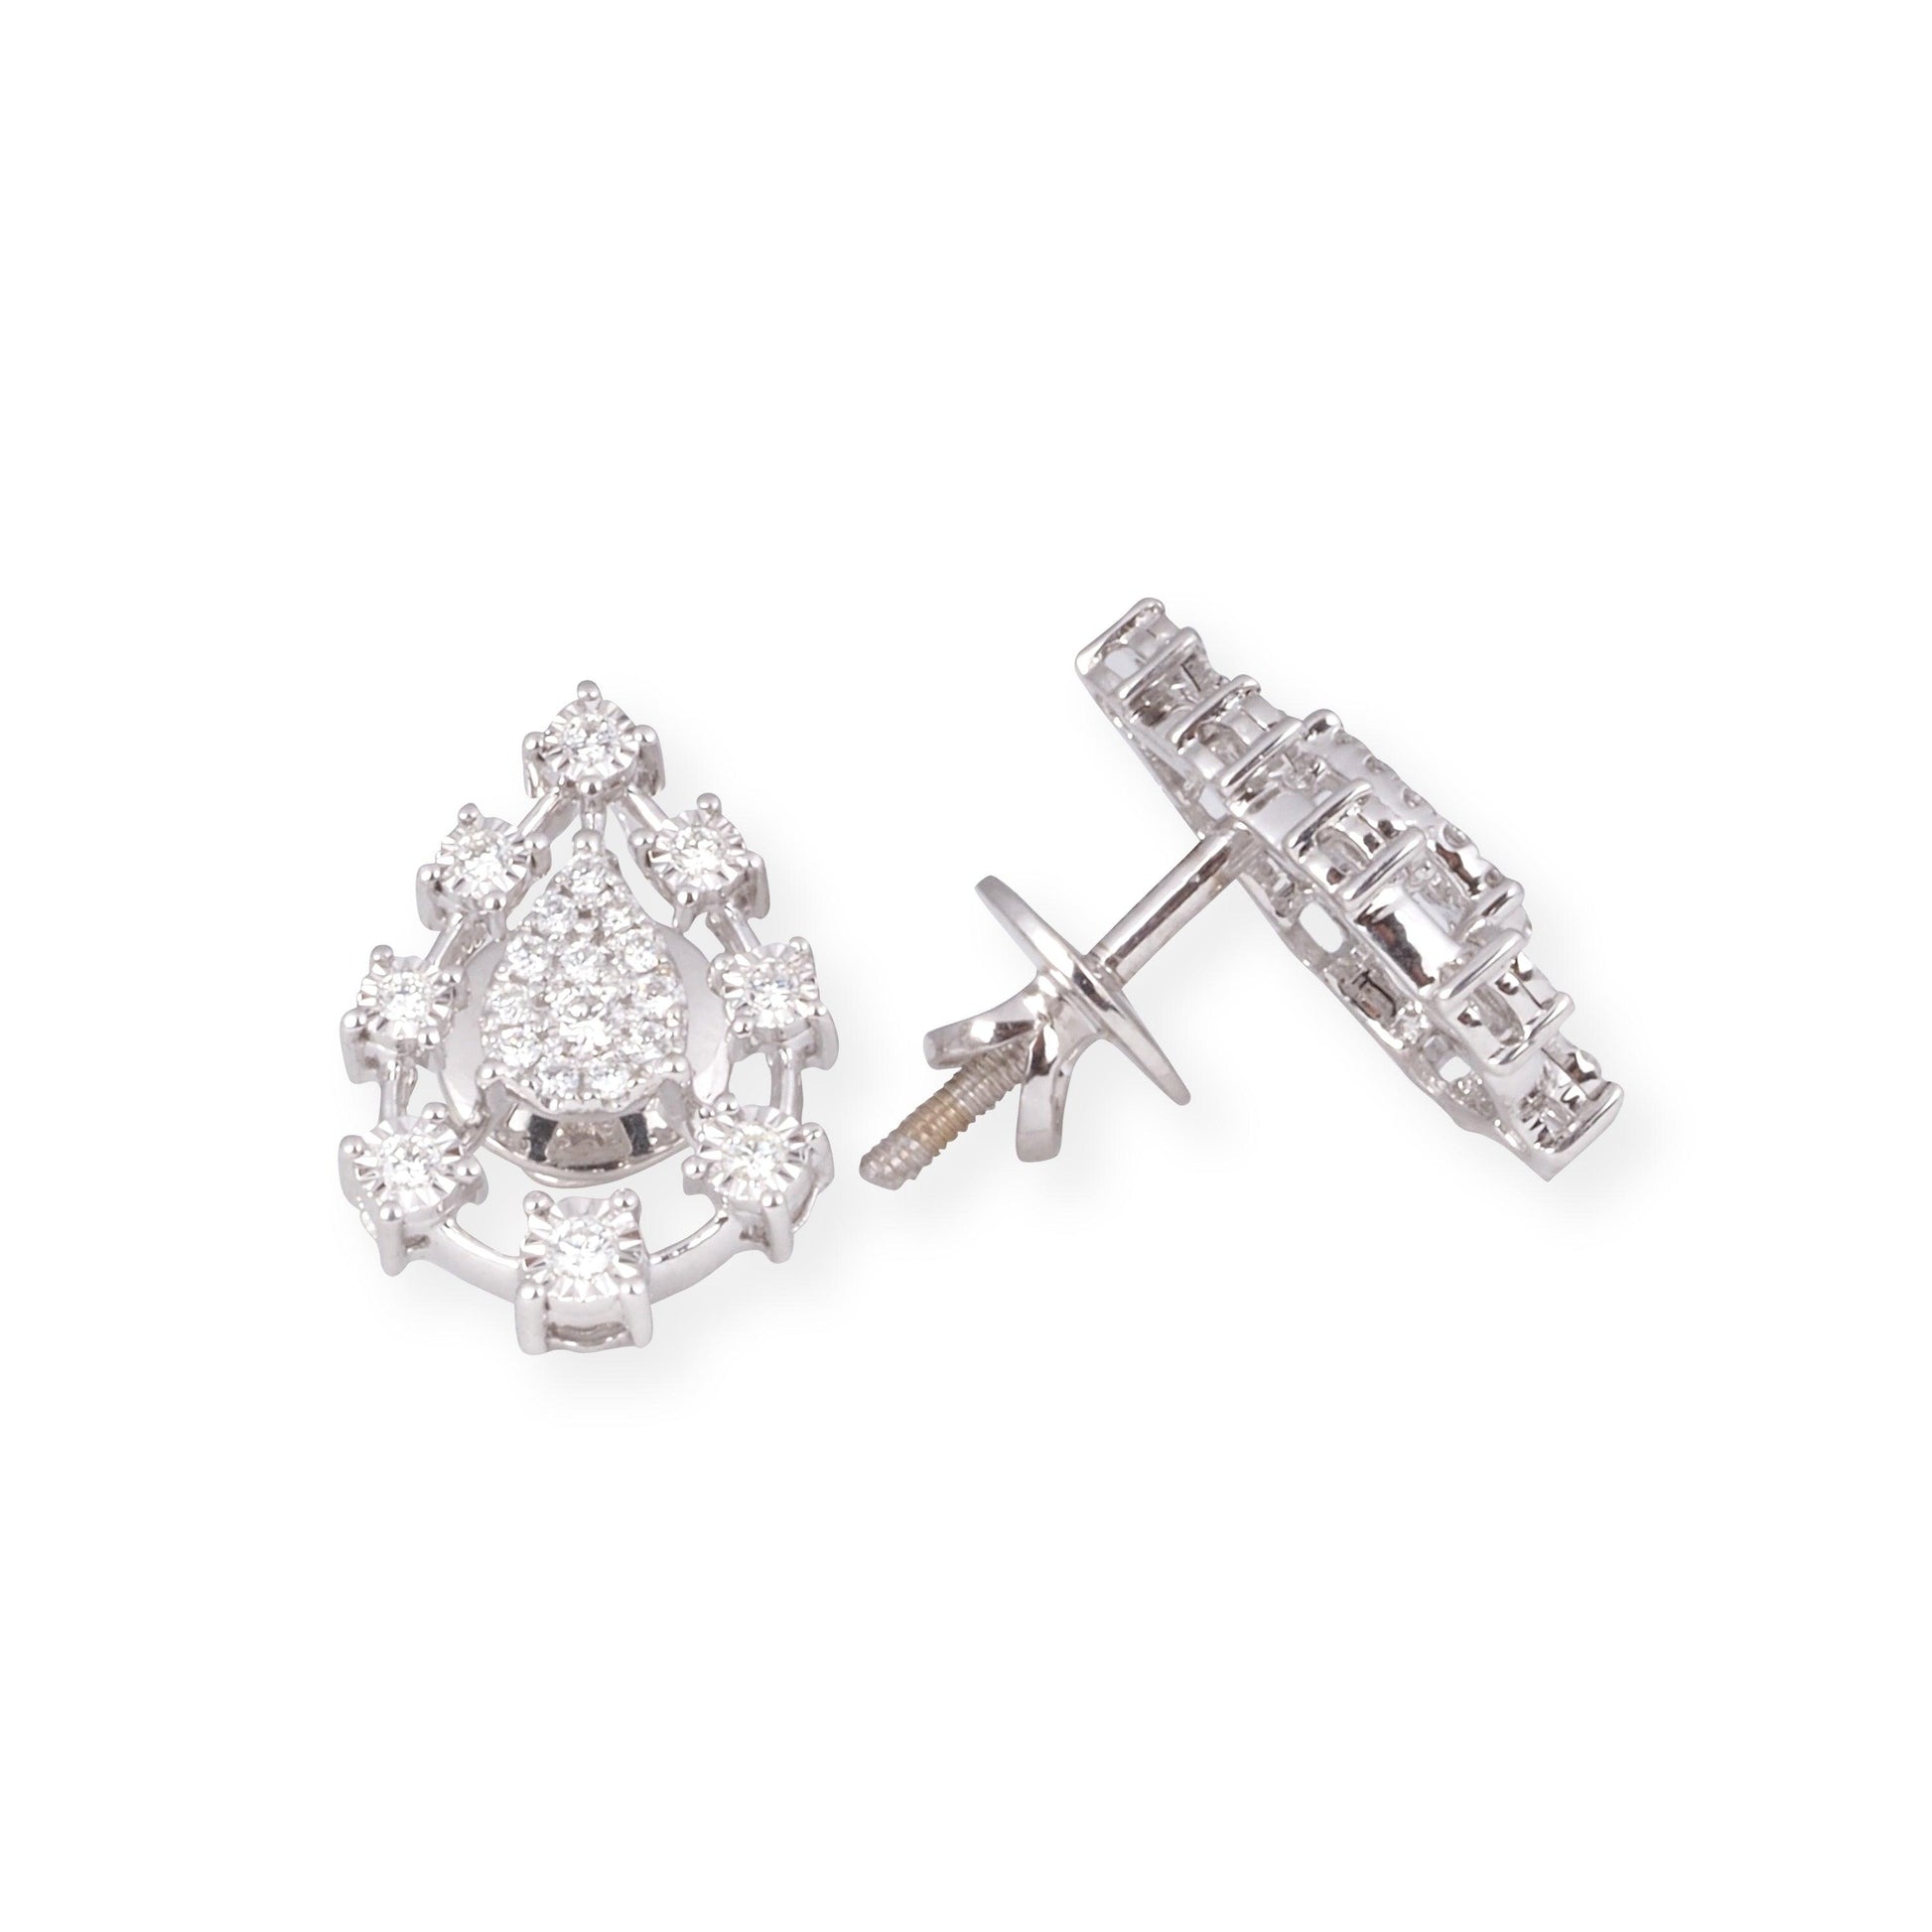 18ct White Gold Diamond Set (Pendant + Chain + Earrings) MCS6853/54 - Minar Jewellers